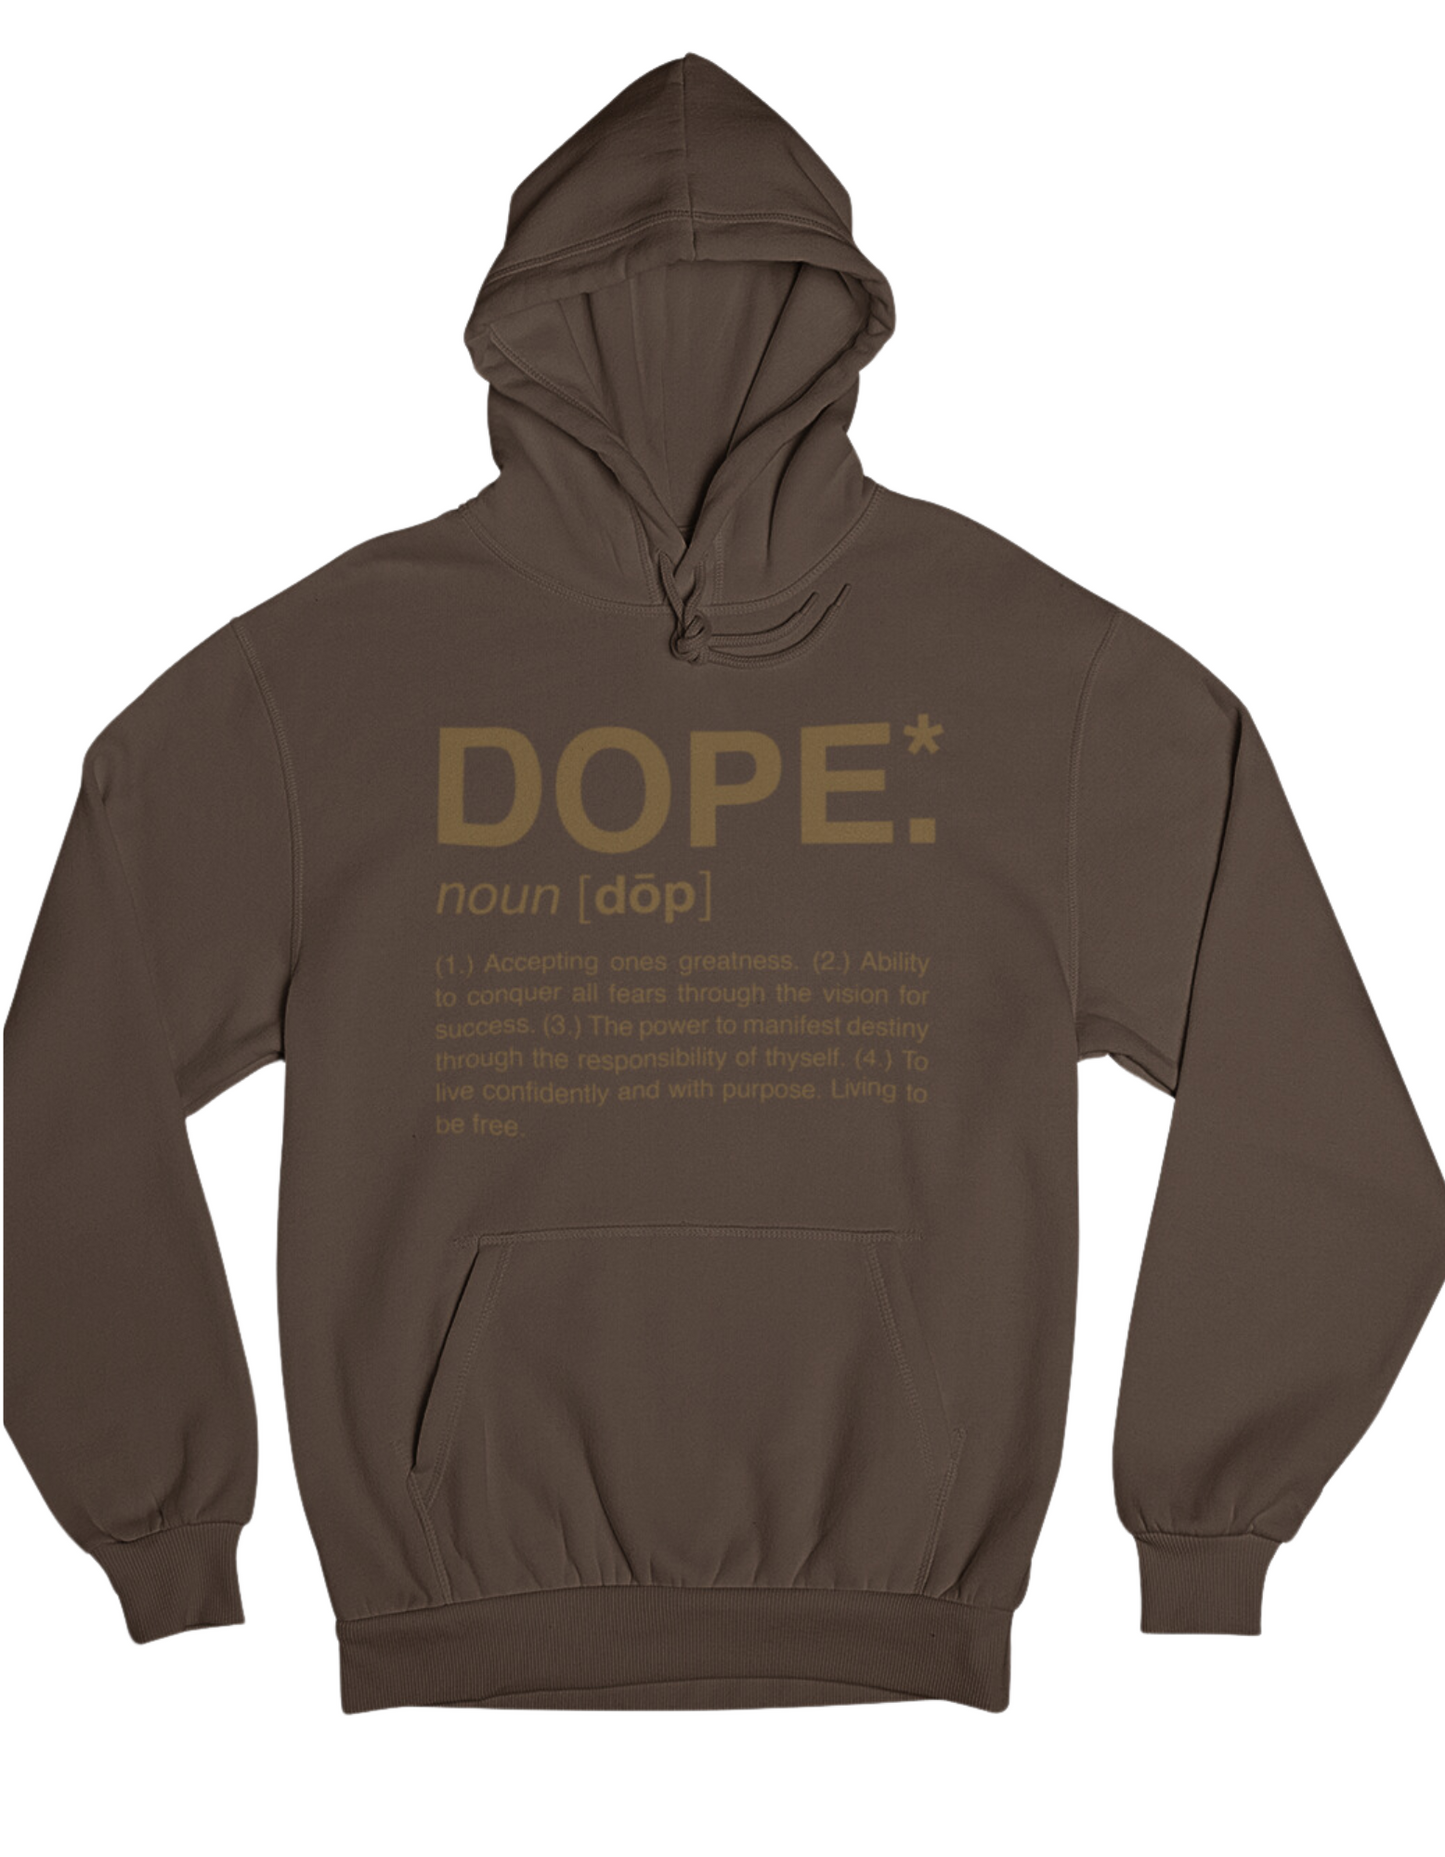 Dope Hoodie (Chocolate Chip)